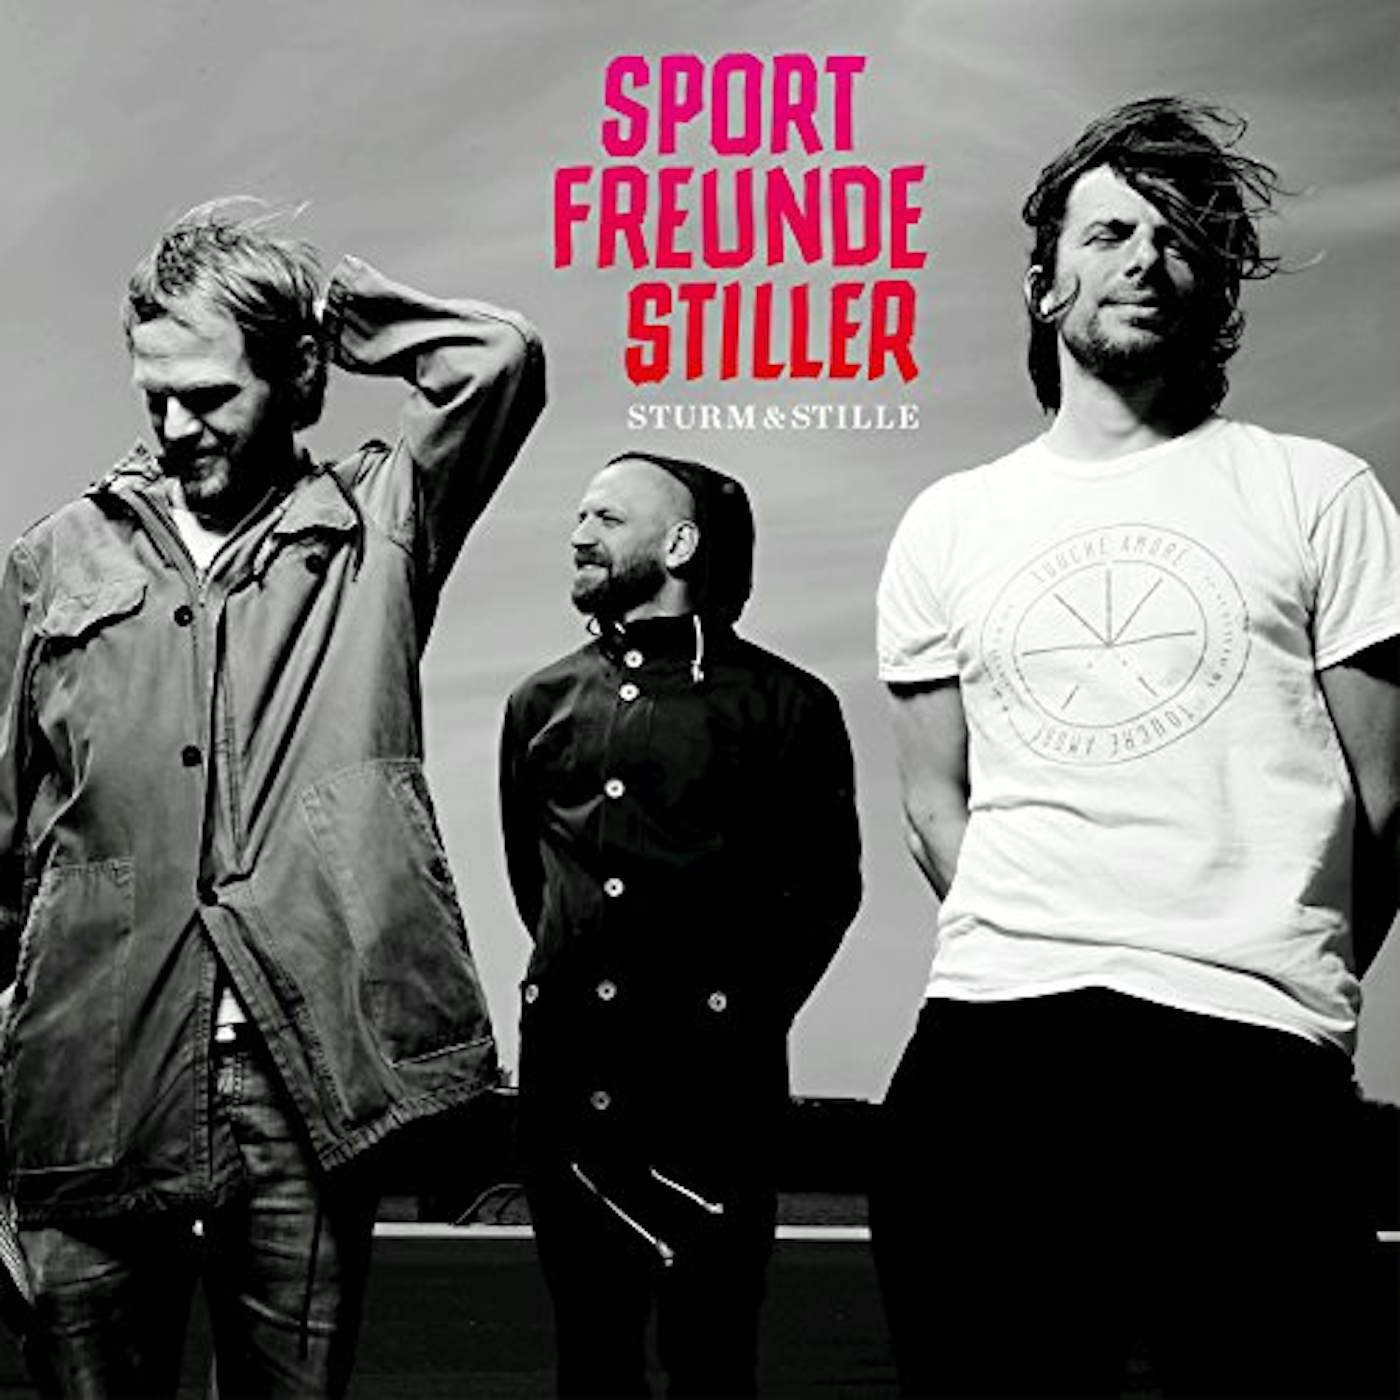 Sportfreunde Stiller Sturm & Stille Vinyl Record